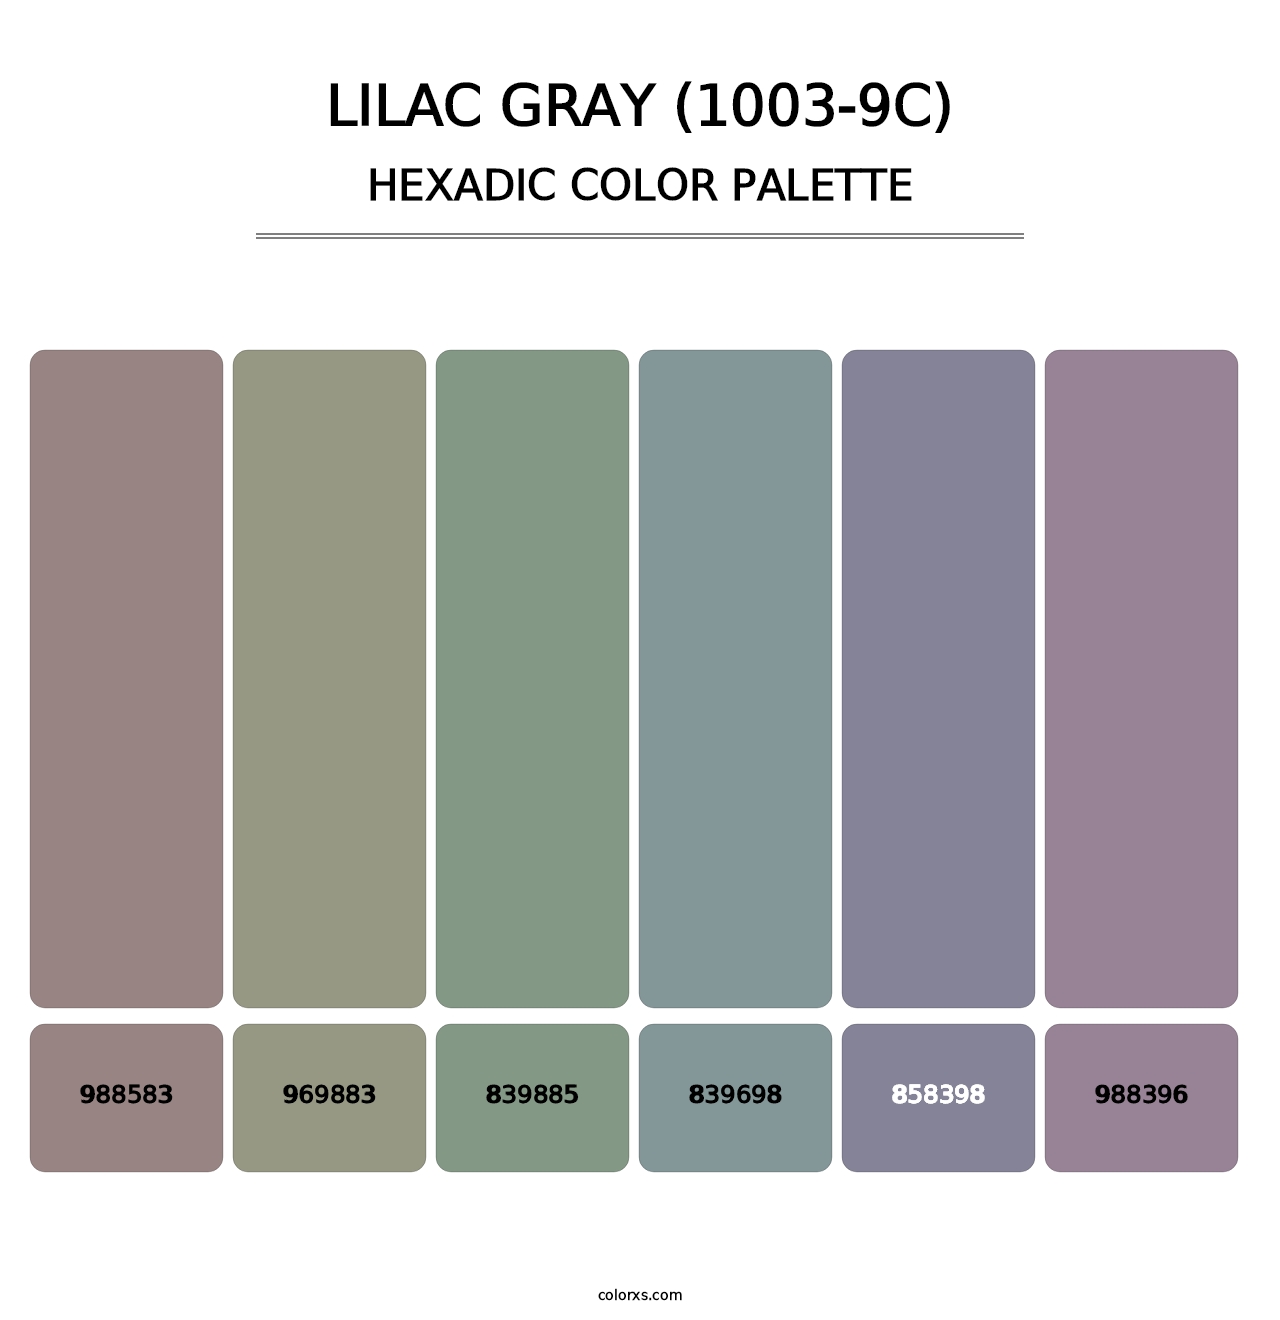 Lilac Gray (1003-9C) - Hexadic Color Palette